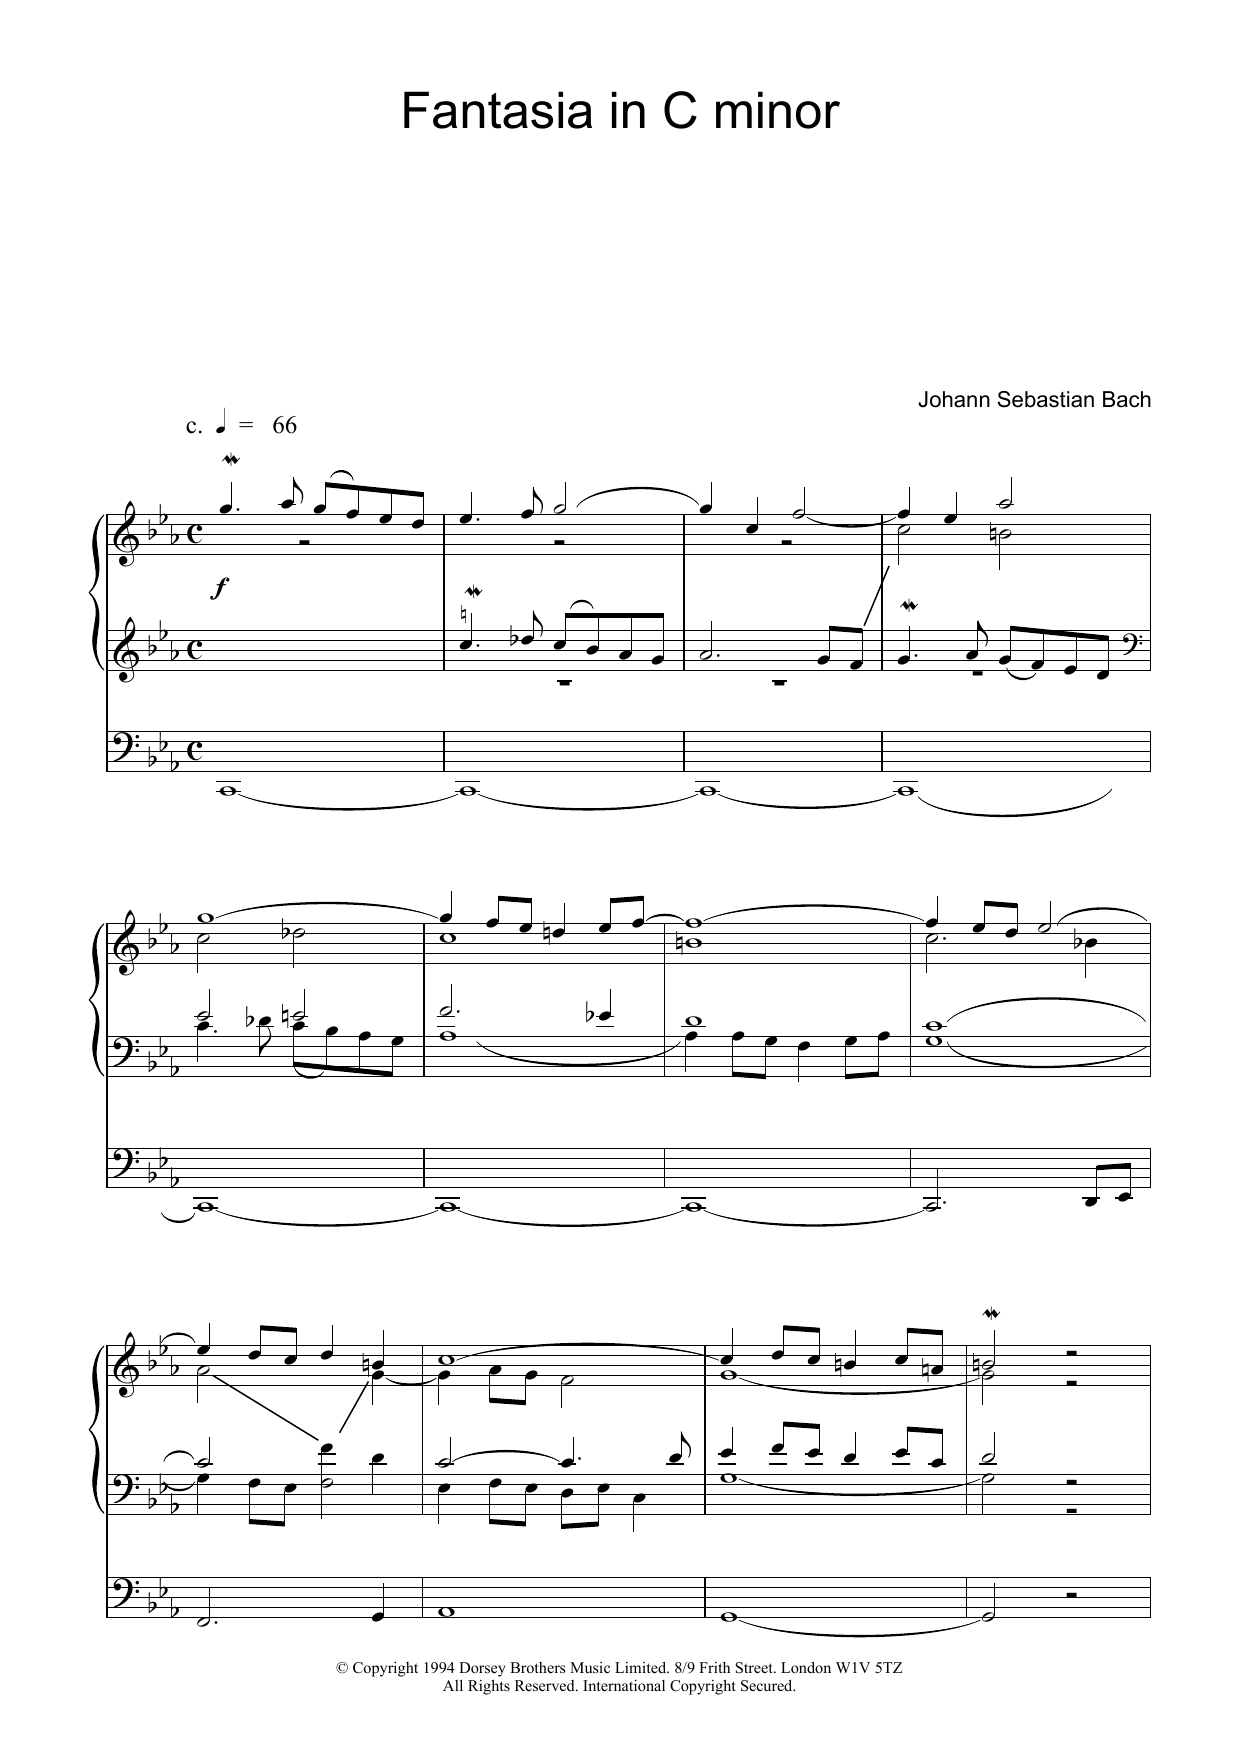 Johann Sebastian Bach Fantasia and Fugue in C Minor, BWV 537 sheet music notes and chords arranged for Organ